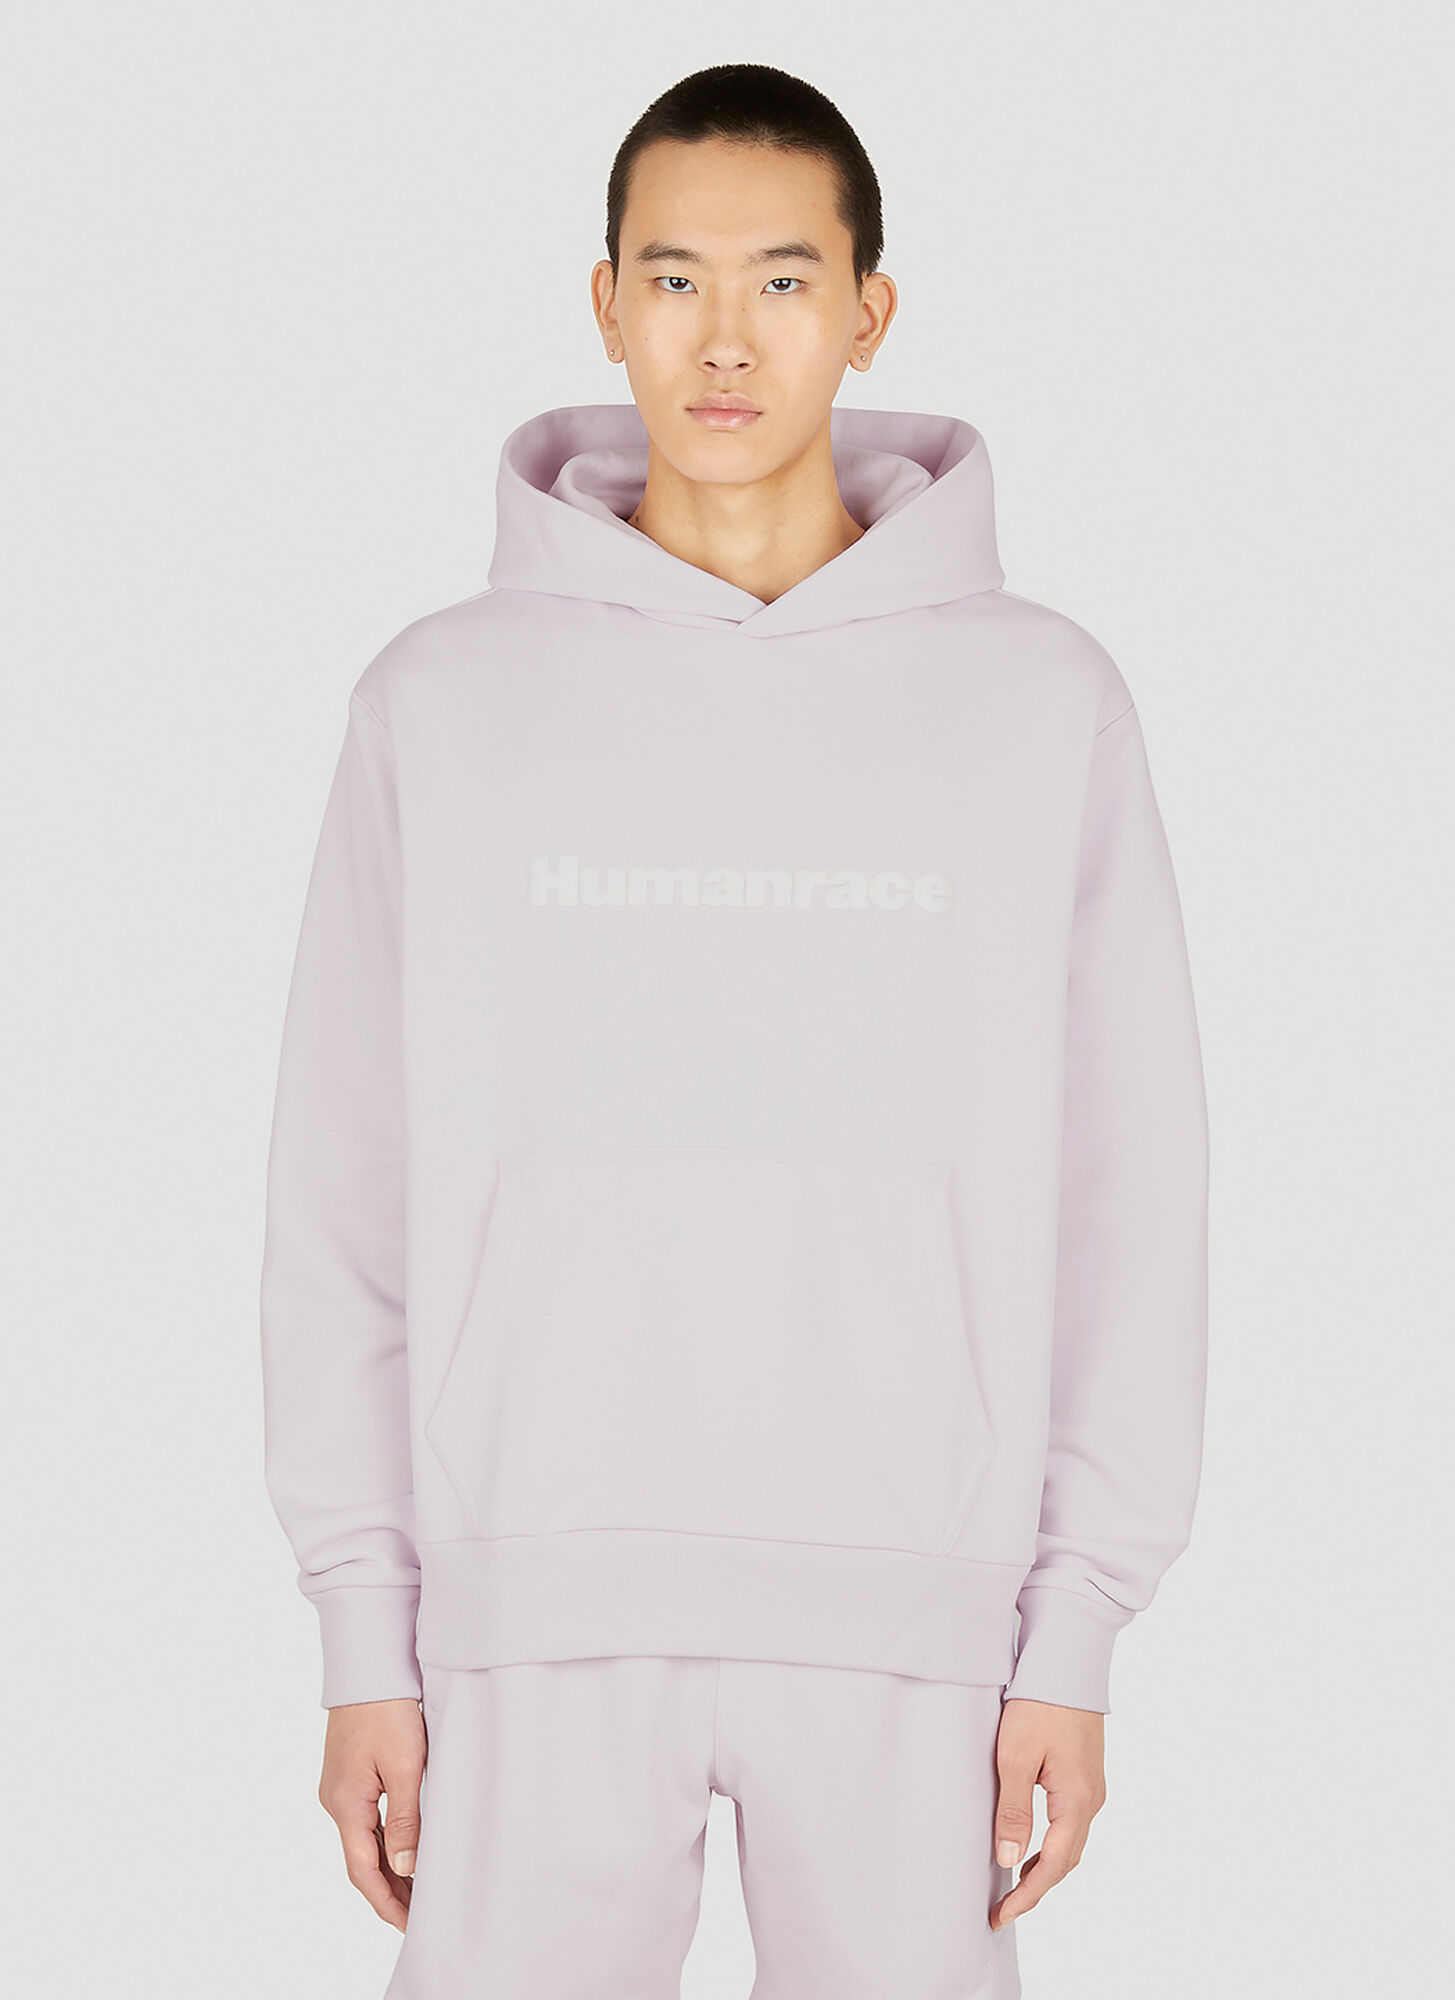 Adidas X Humanrace Basics Hooded Sweatshirt Male Lilac